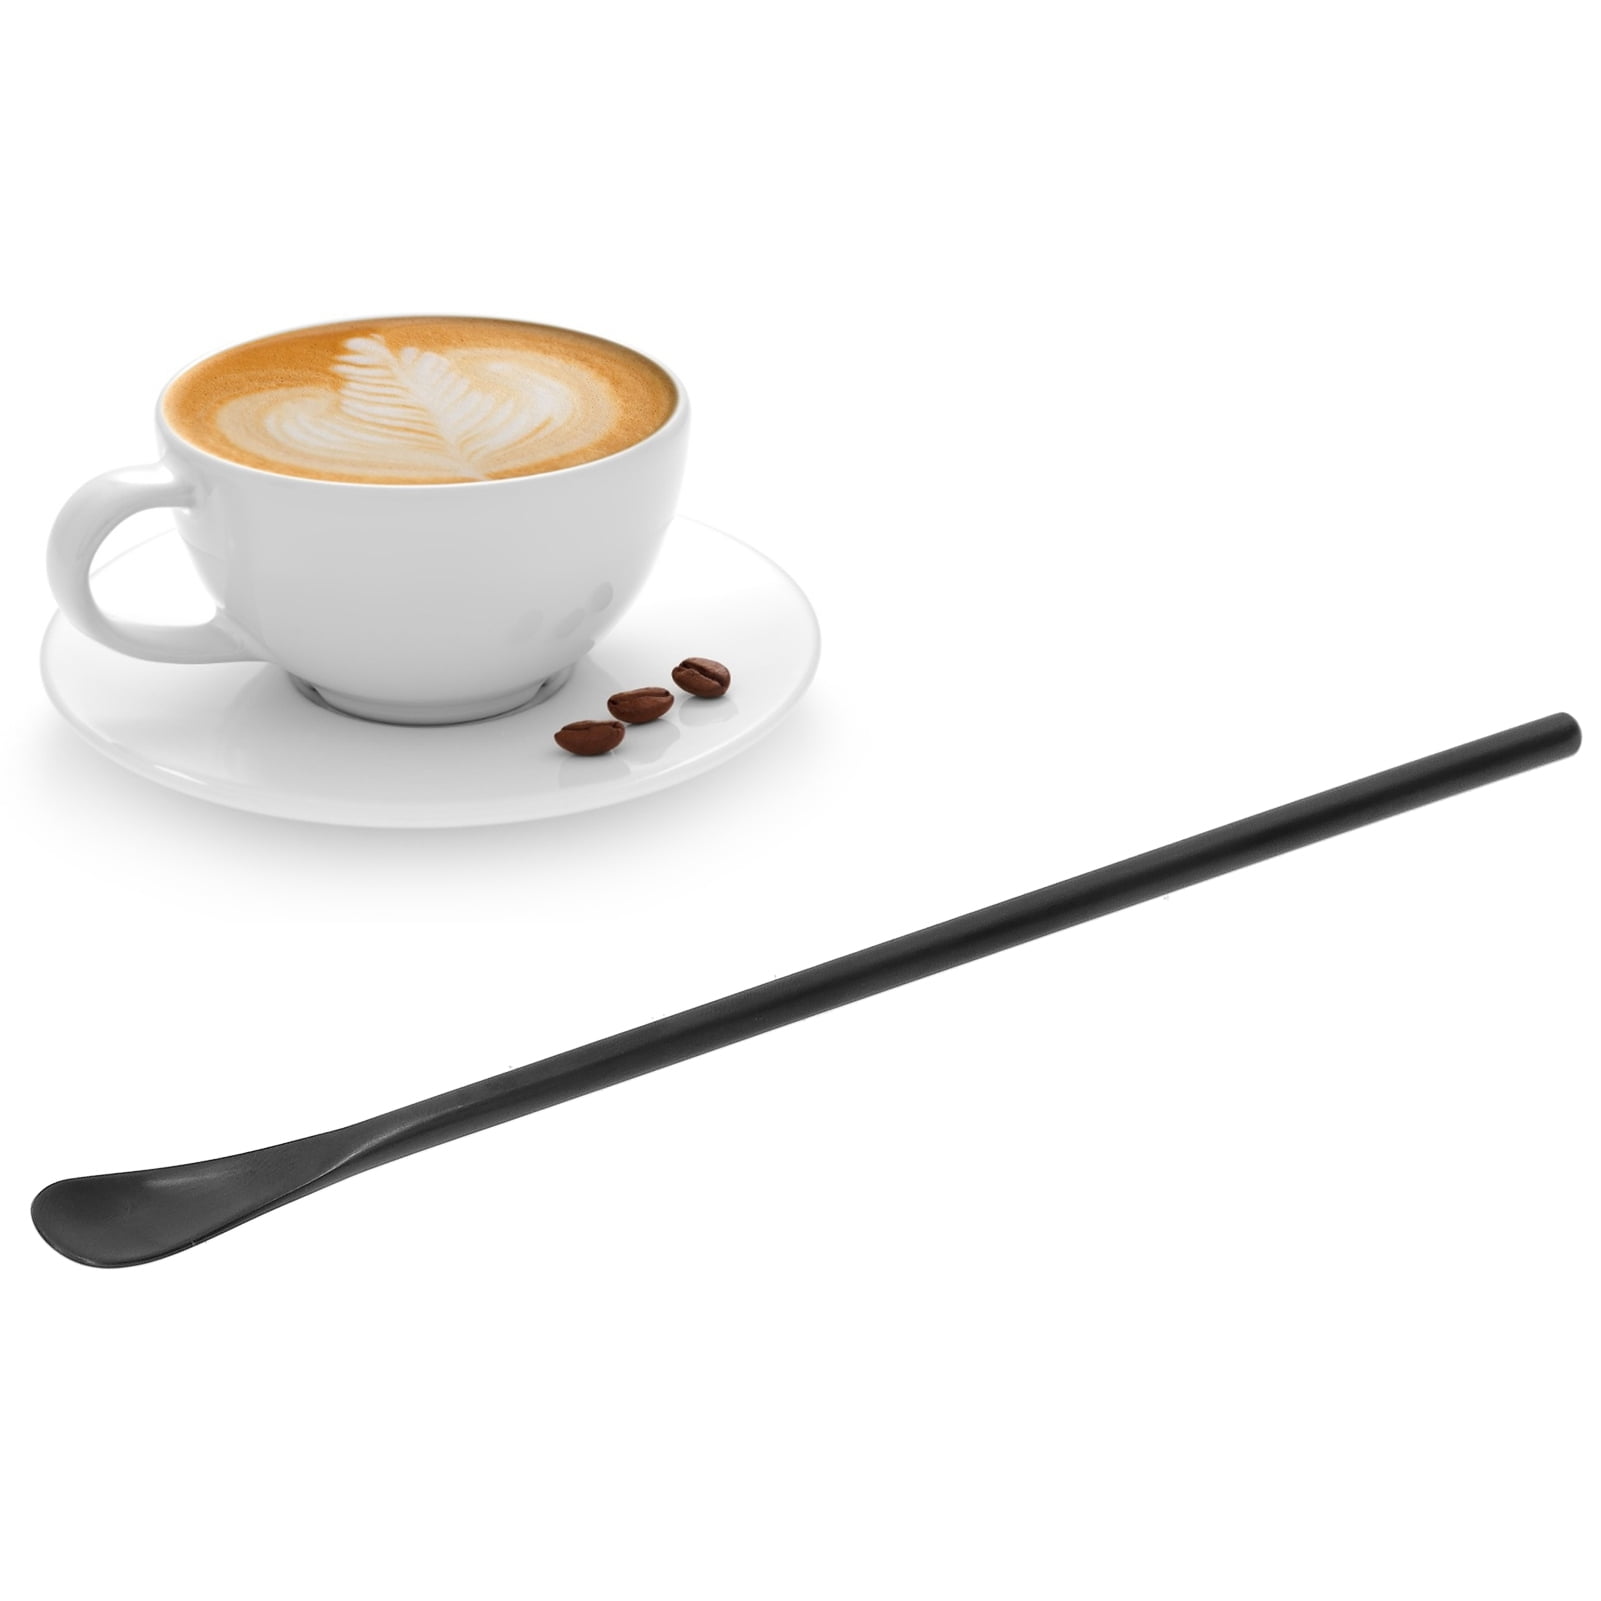 WOW Slim Cocktail/Coffee Stirrer - 5.25, Black